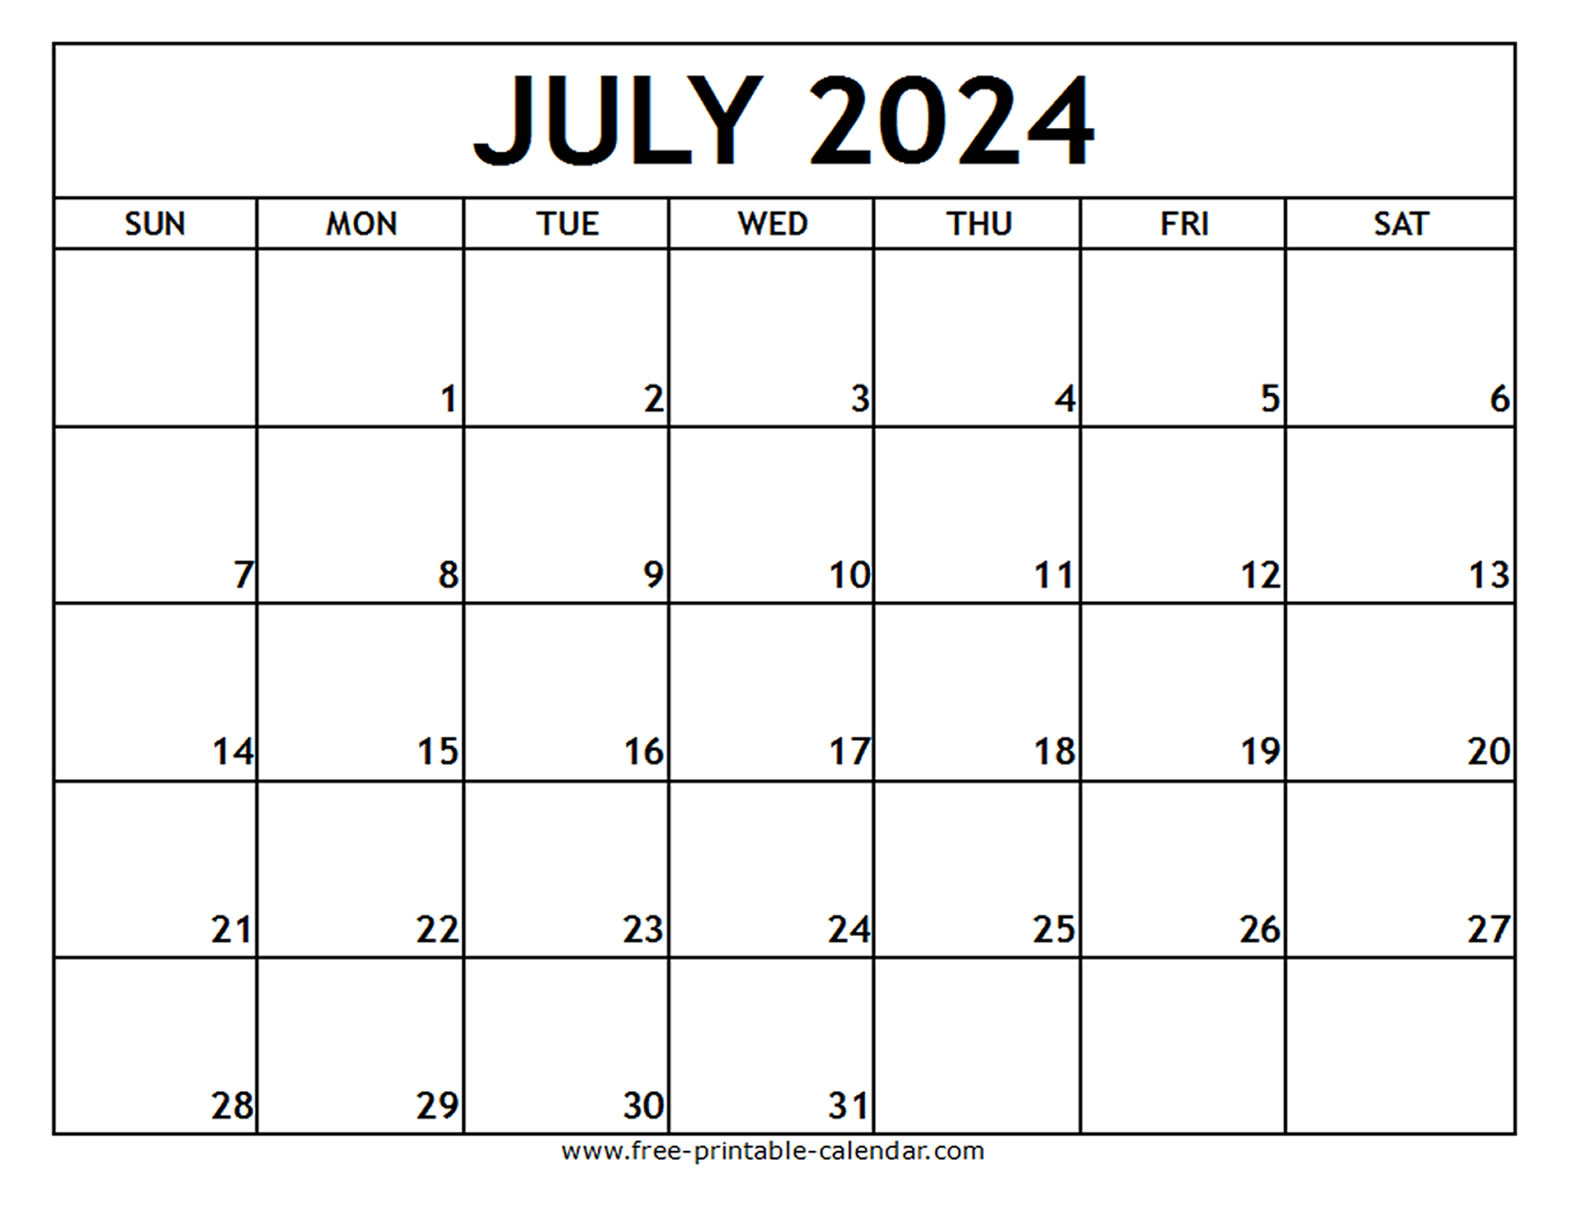 July 2024 Printable Calendar - Free-Printable-Calendar | July Calendar Printable Template 2024